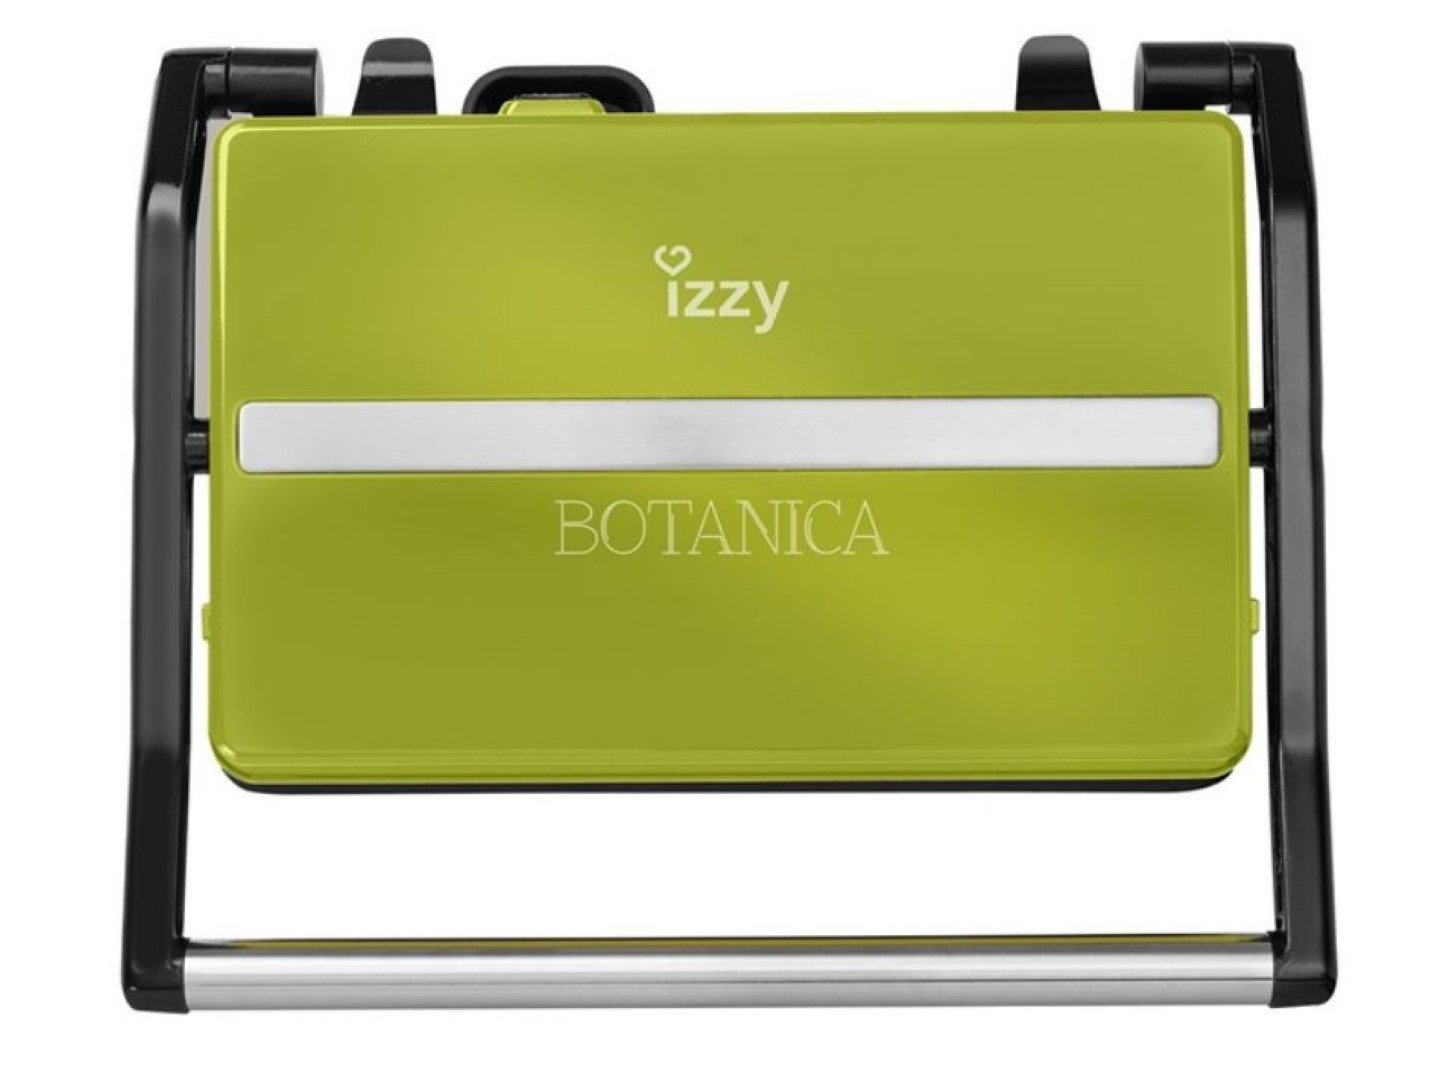 Izzy IZ 2001 Toaster Countertop Open Box 1000 Watts (Copy)